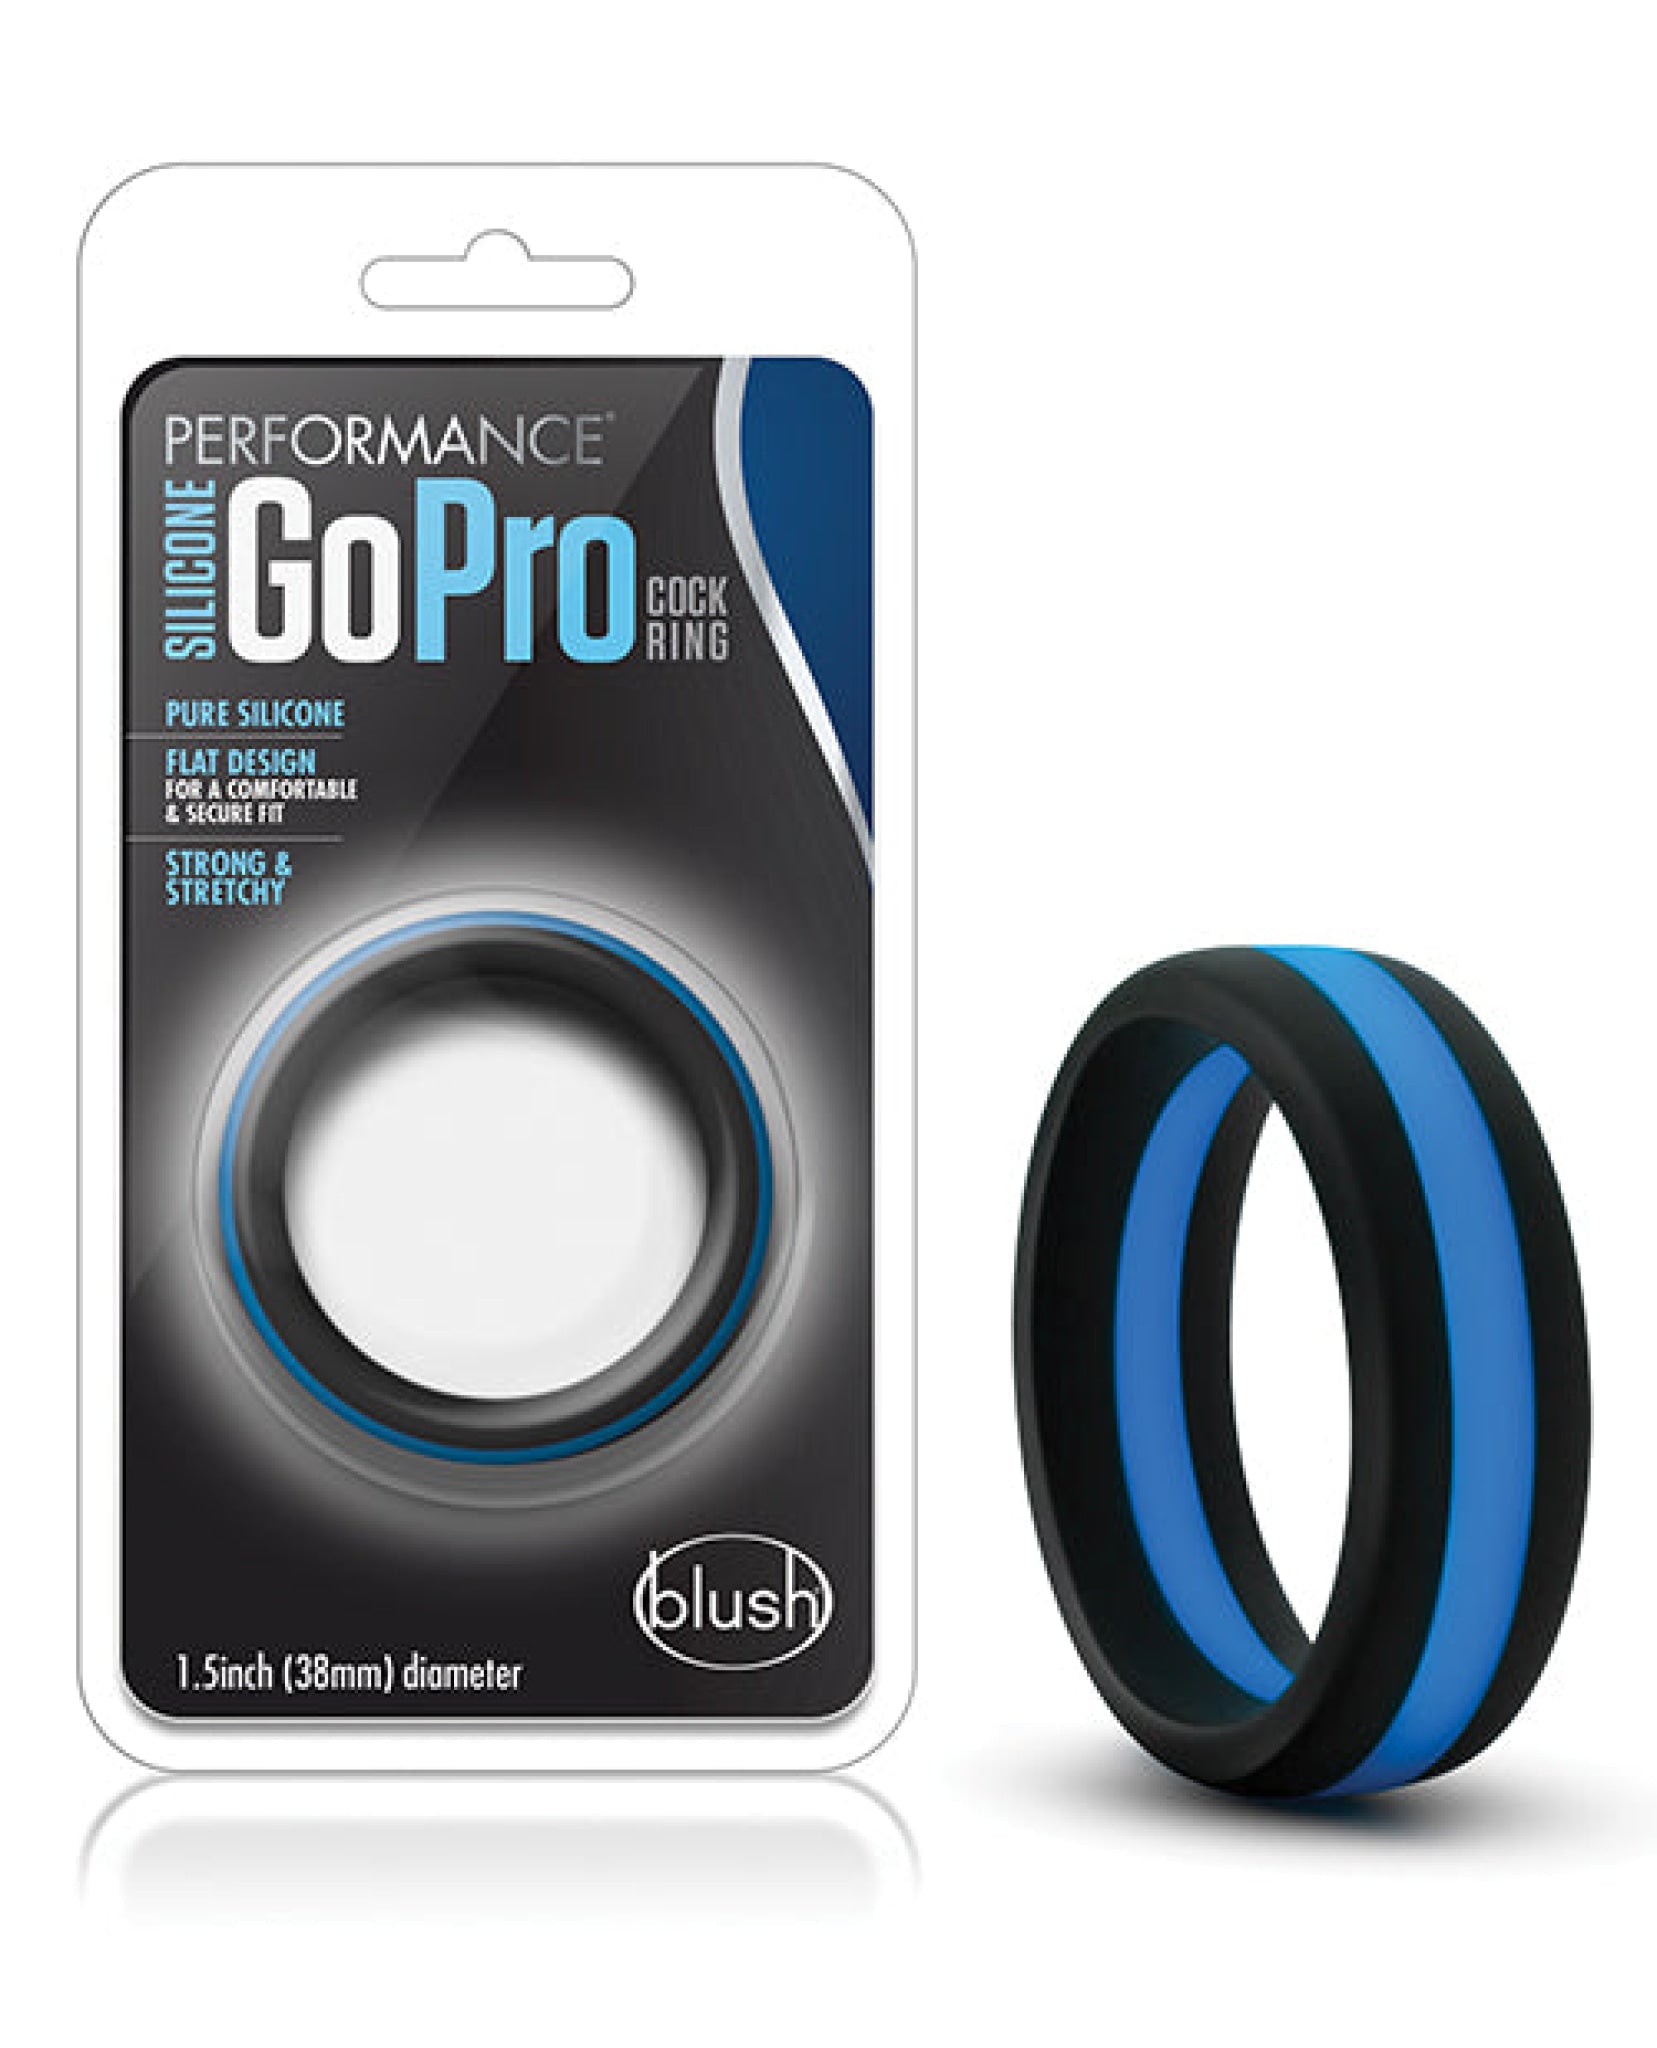 Blush Performance Silicone Go Pro Cock Ring - Black-blue Blush Novelties